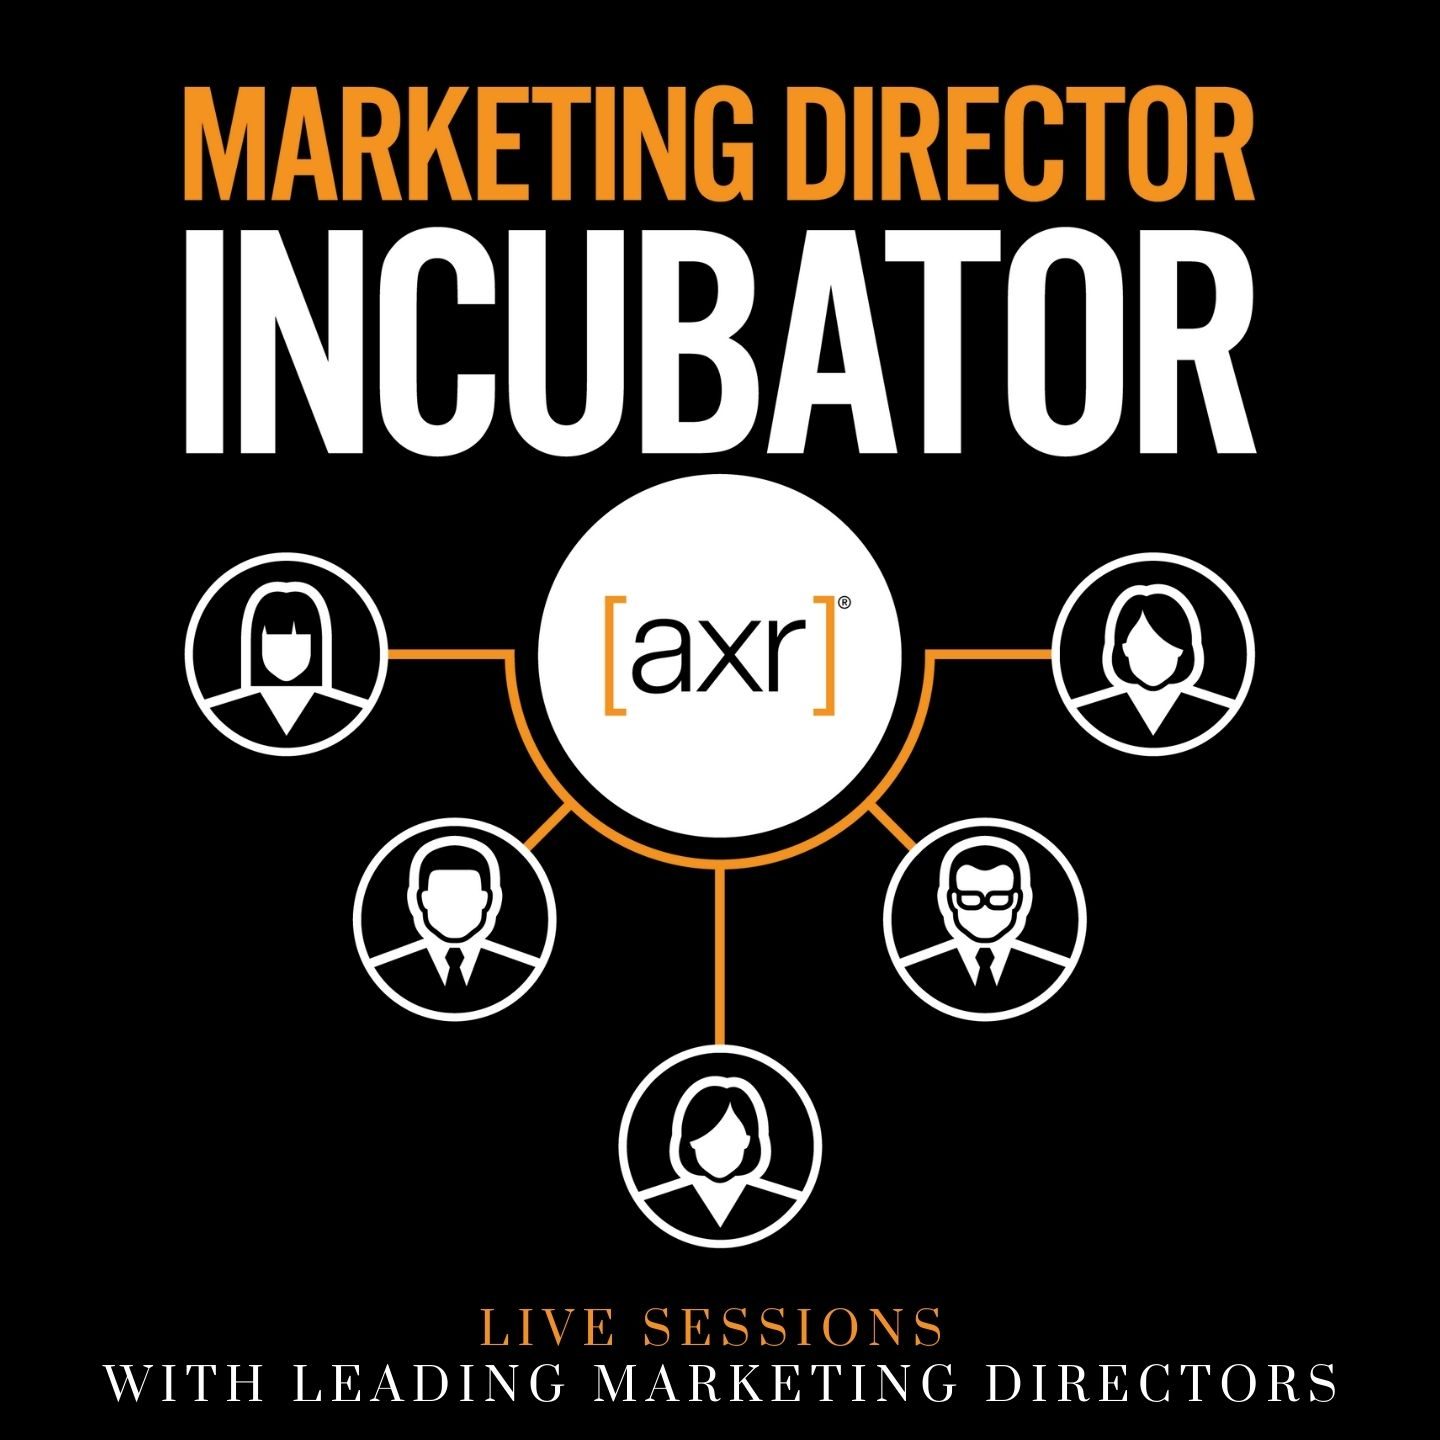 Marketing Director Incubator live webinars